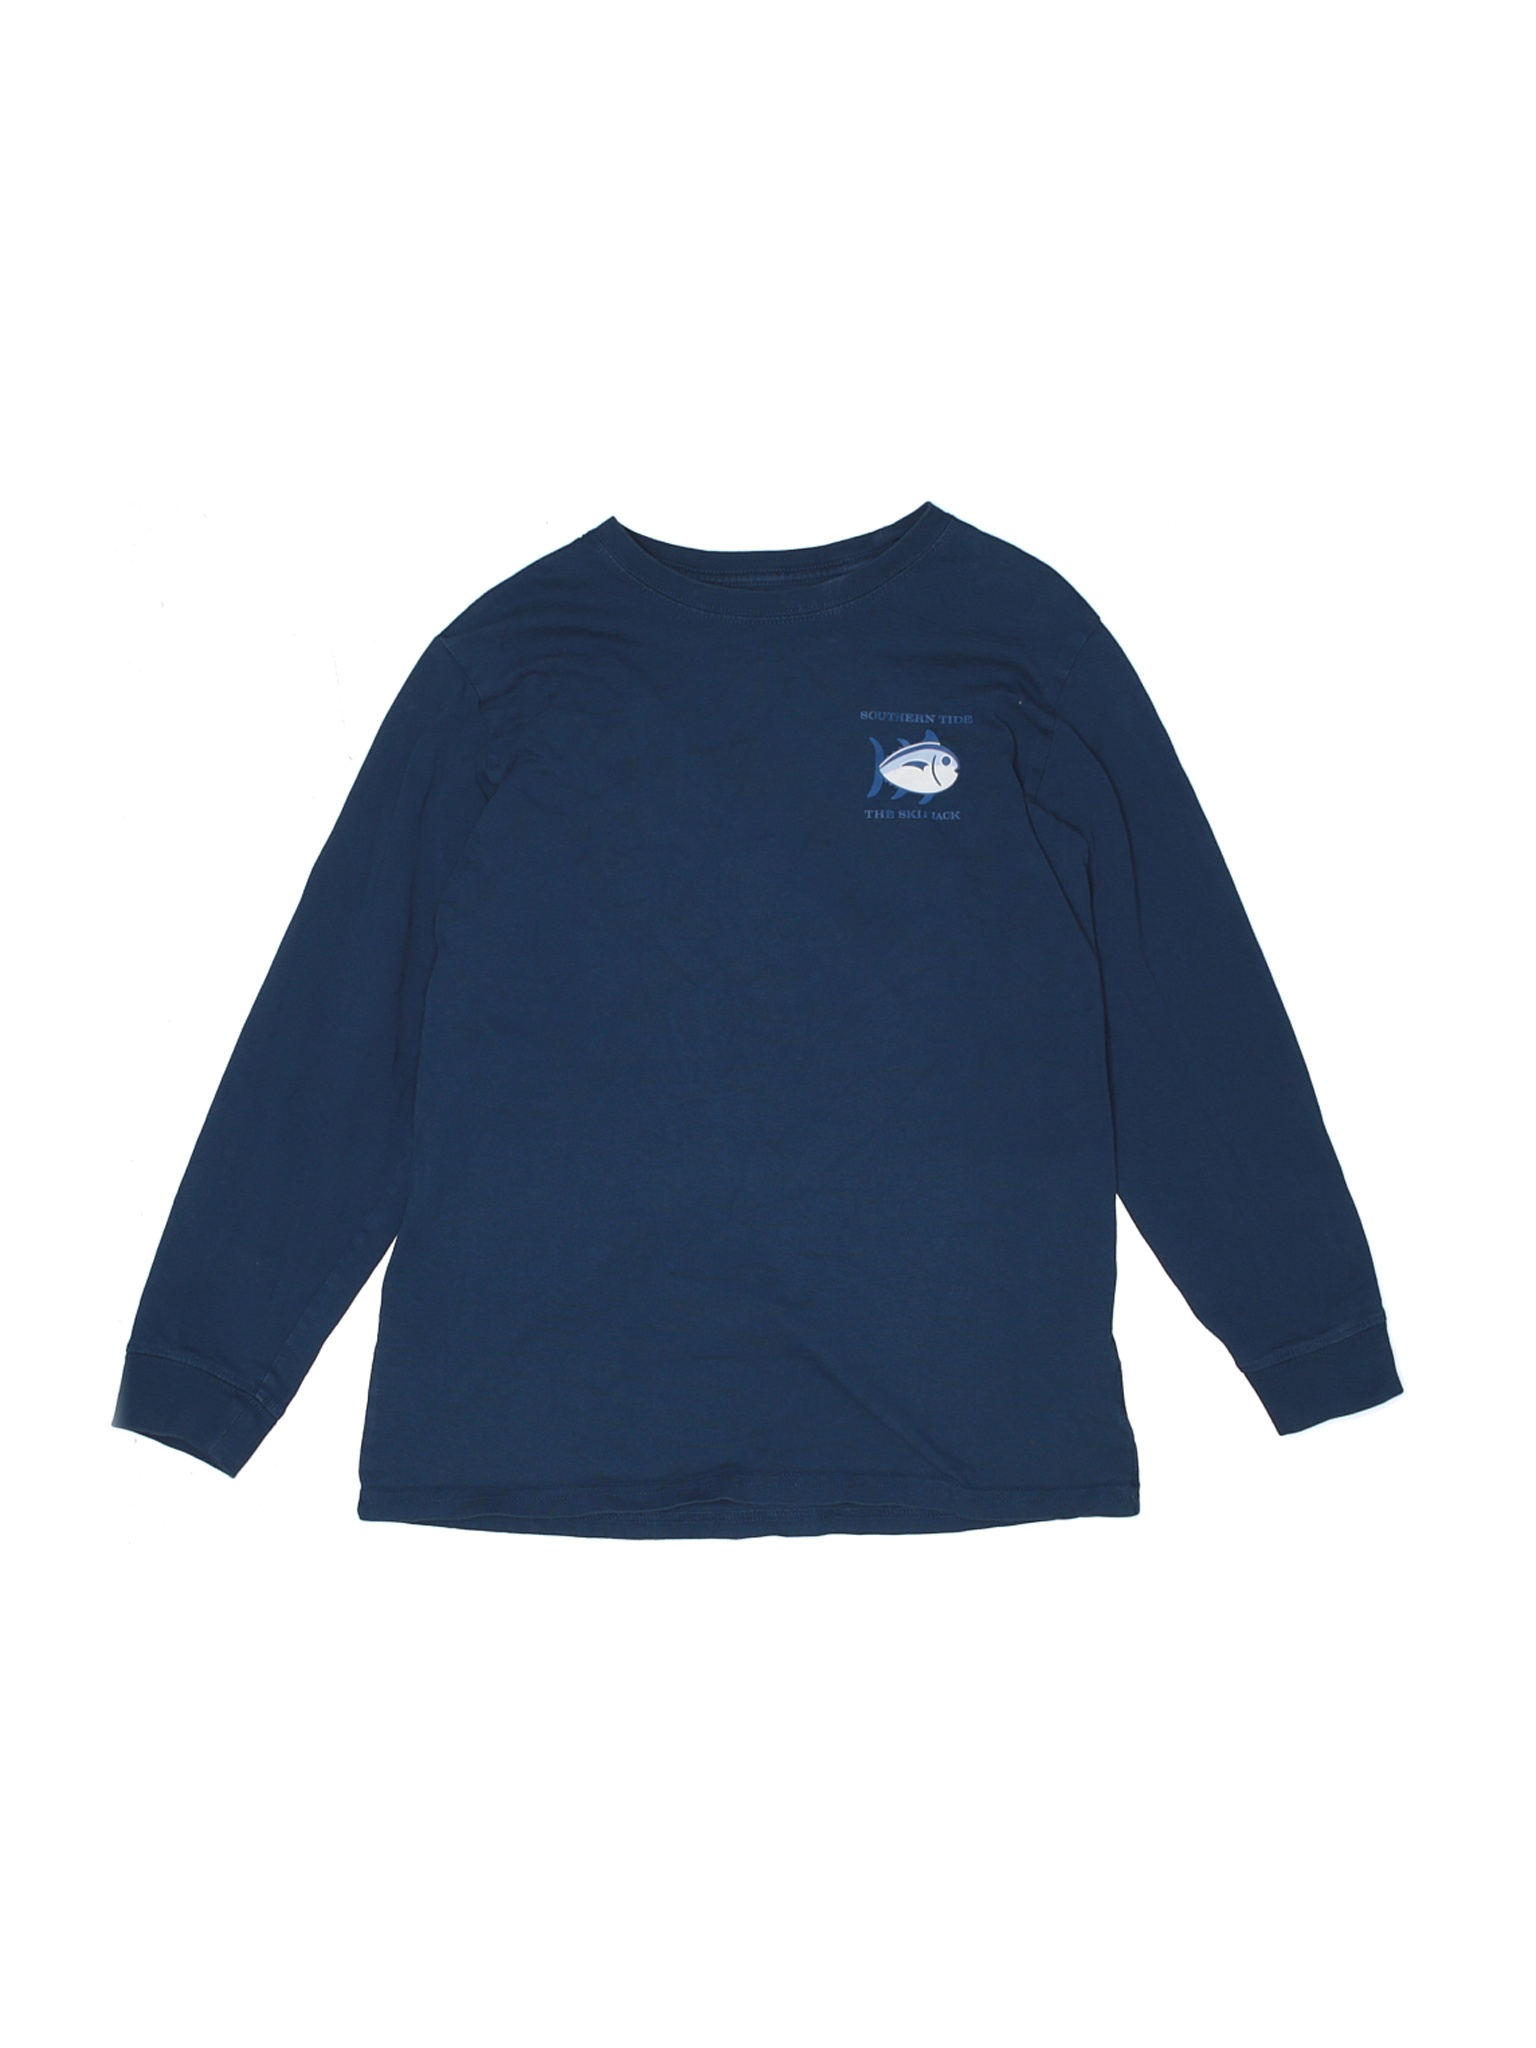 Southern Tide Boys Blue Long Sleeve T-Shirt L Youth | eBay